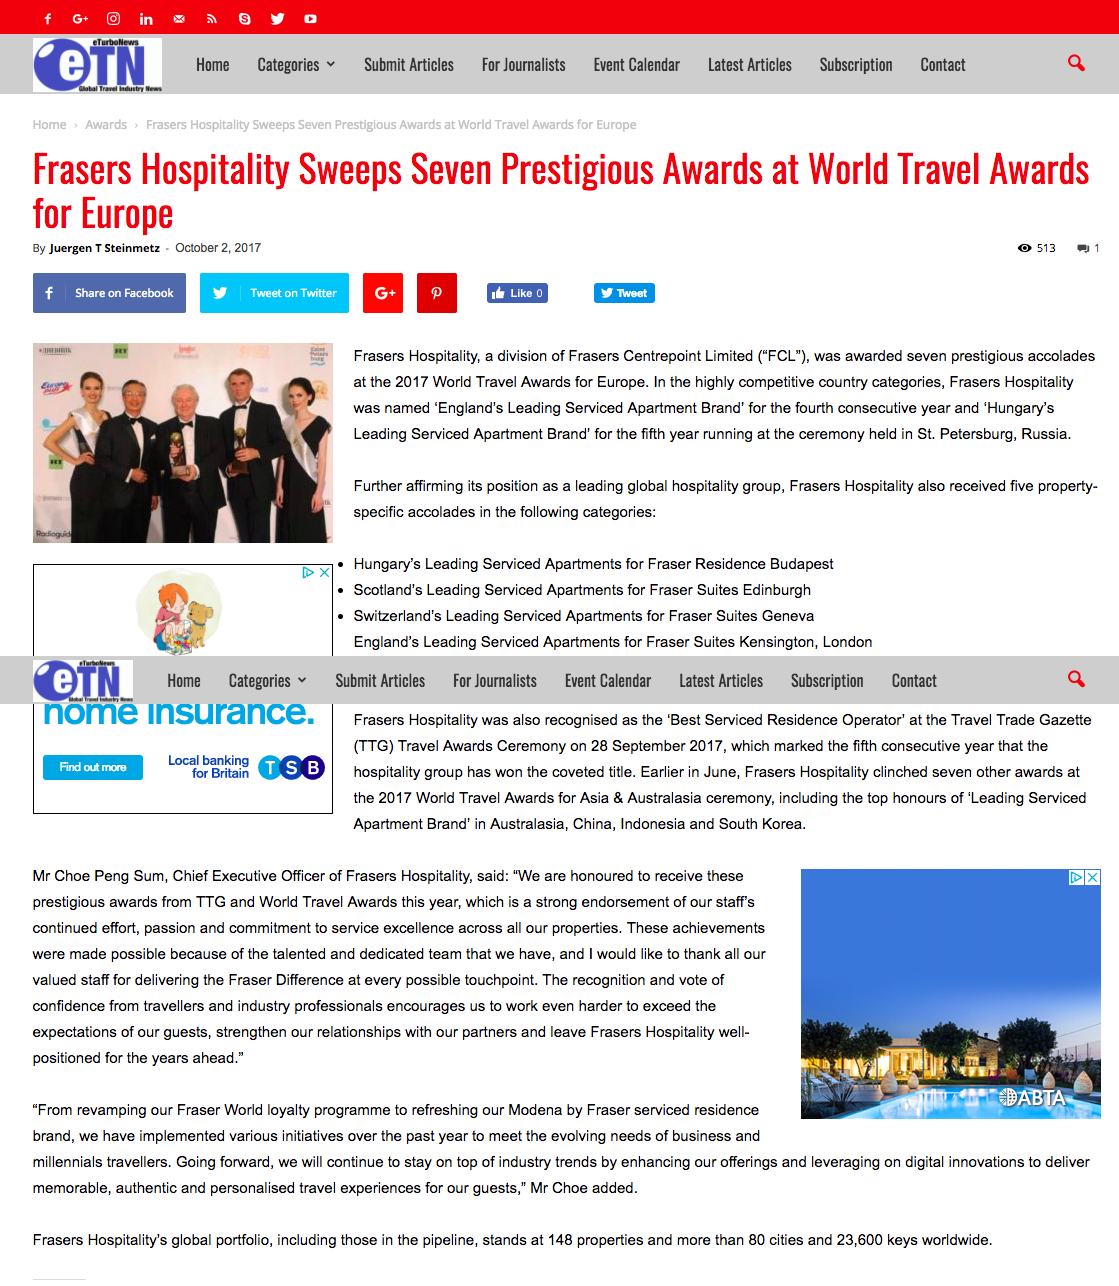 Frasers Hospitality Sweeps Seven Prestigious Awards at World Travel Awards for Europe